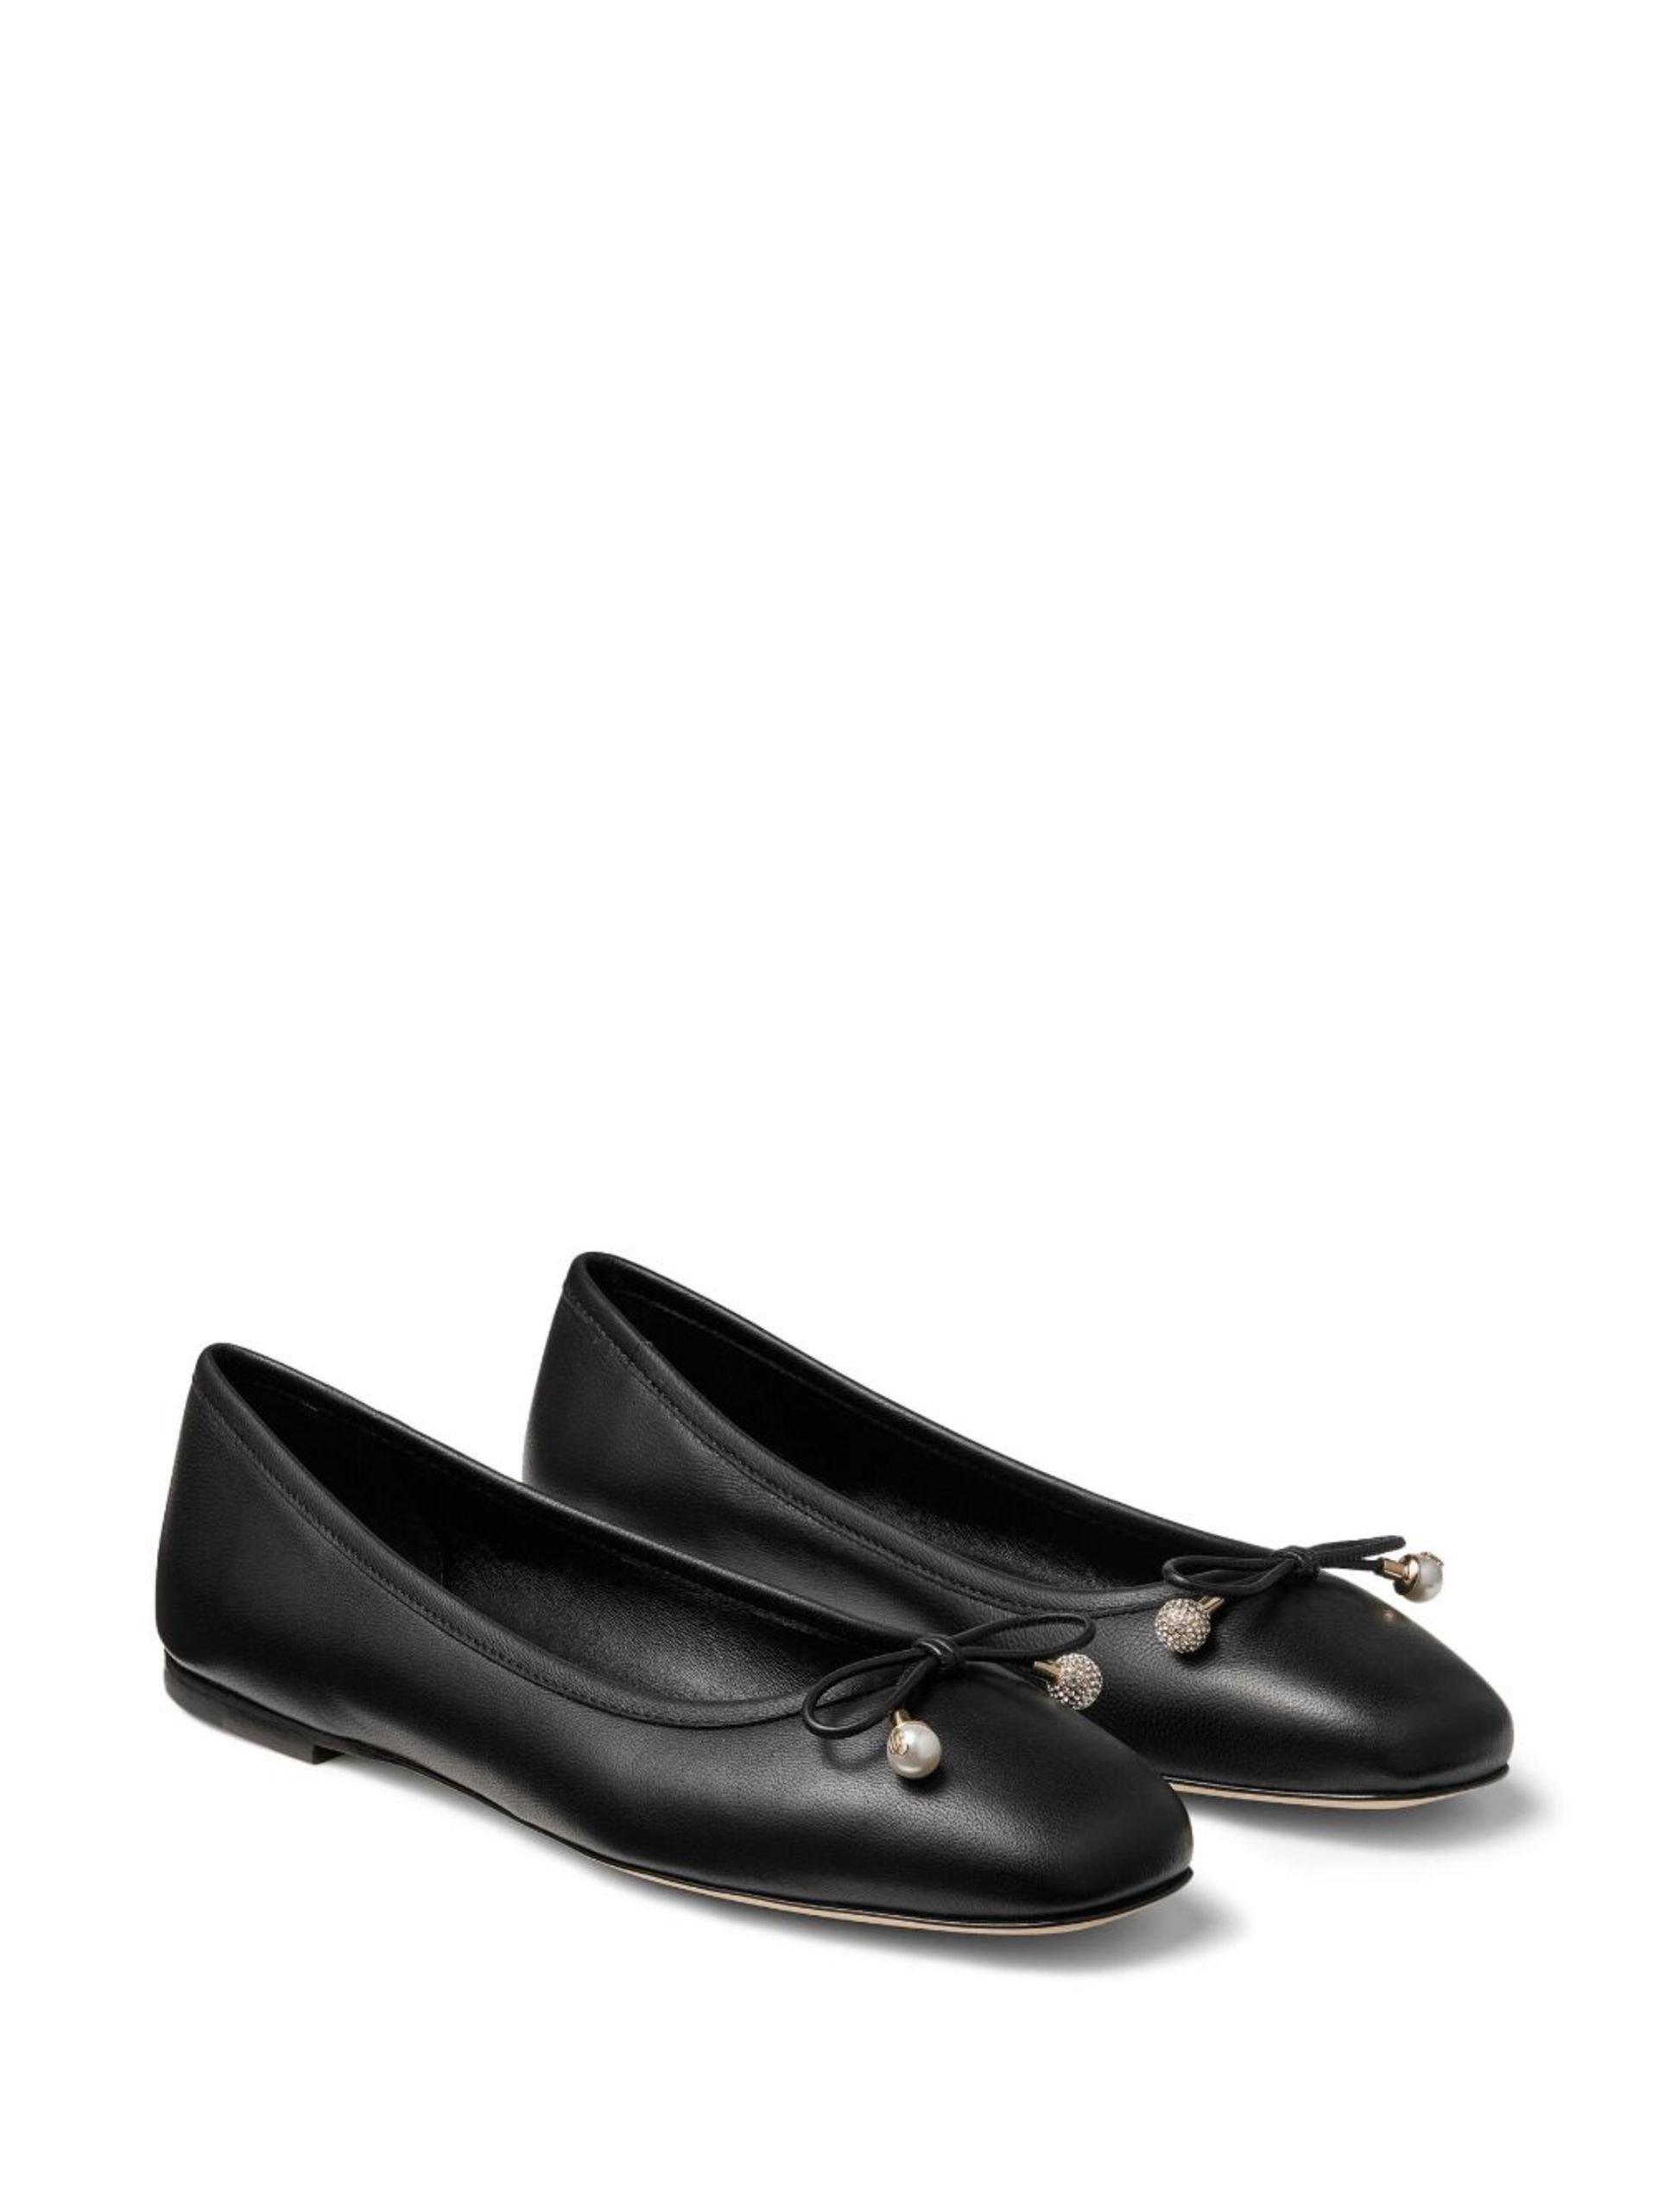 Black Elme Leather Ballerina Shoes - 2